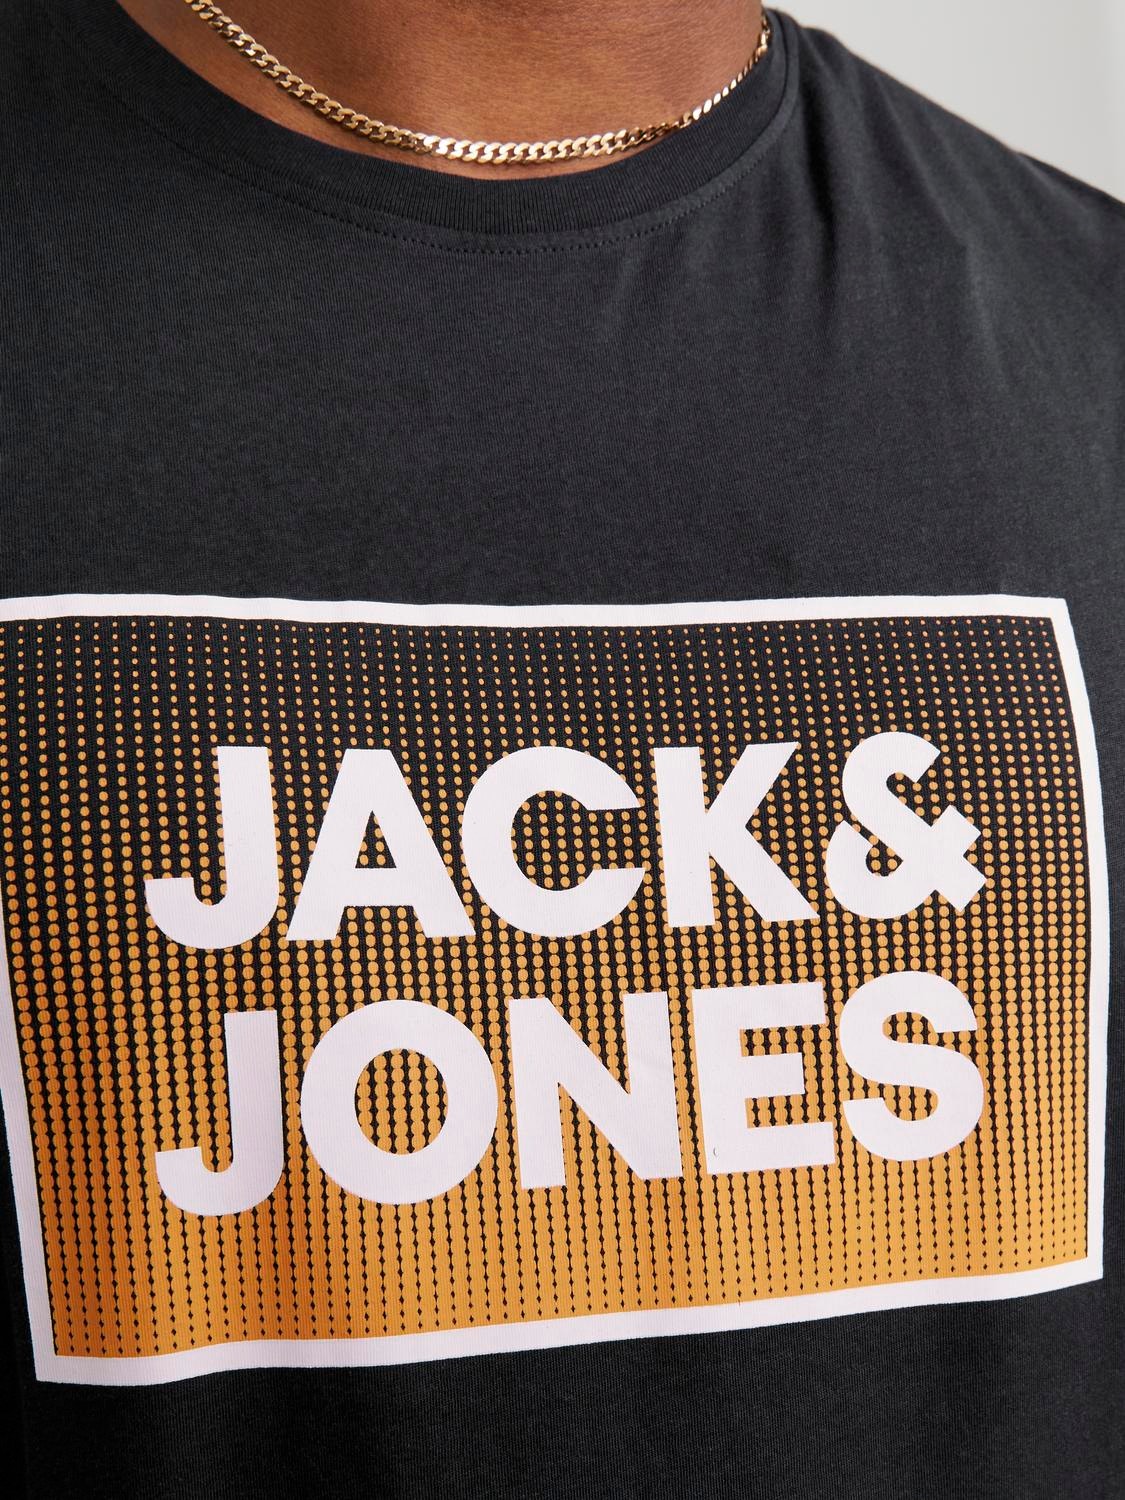 Jack & Jones Plus Printed T-shirt -Dark Navy - 12254906